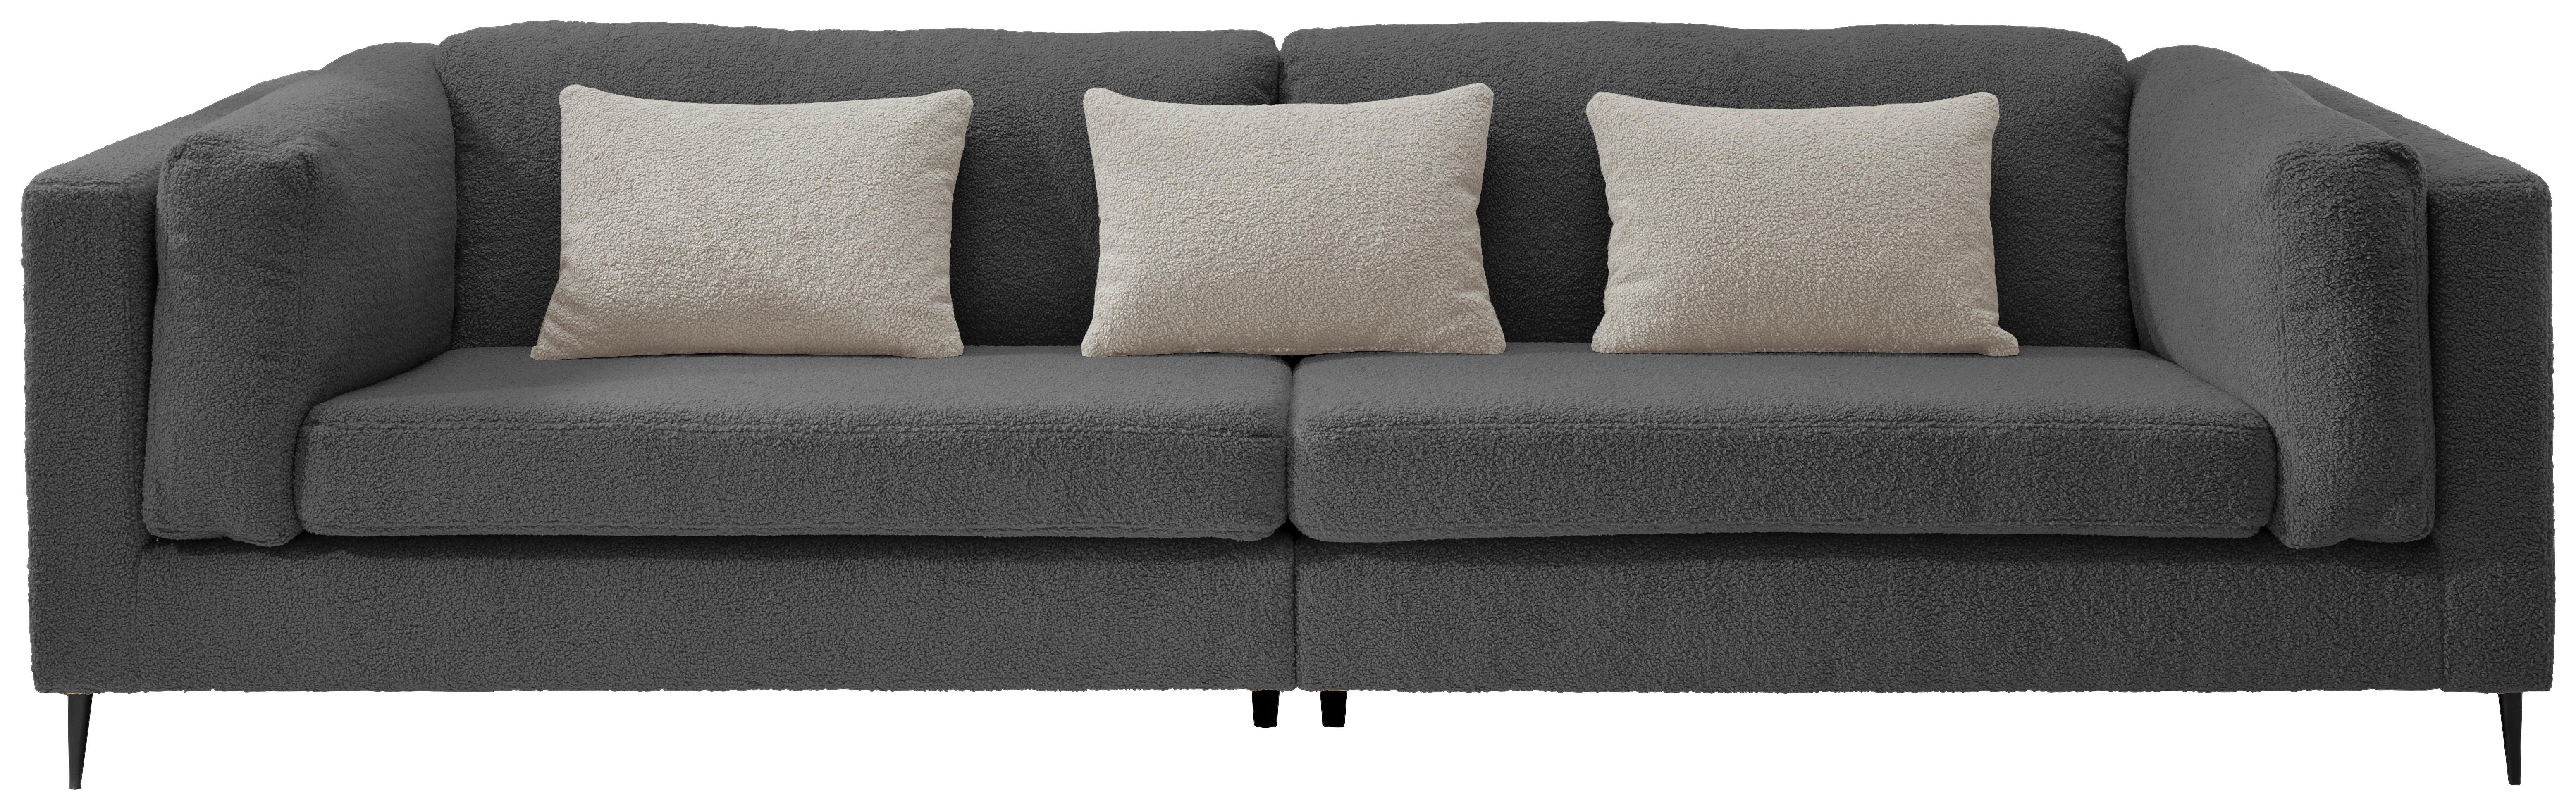 4-Sitzer-Sofa Roma Anthrazit Teddystoff - Anthrazit/Silberfarben, Design, Textil (306/83/113cm) - Livetastic